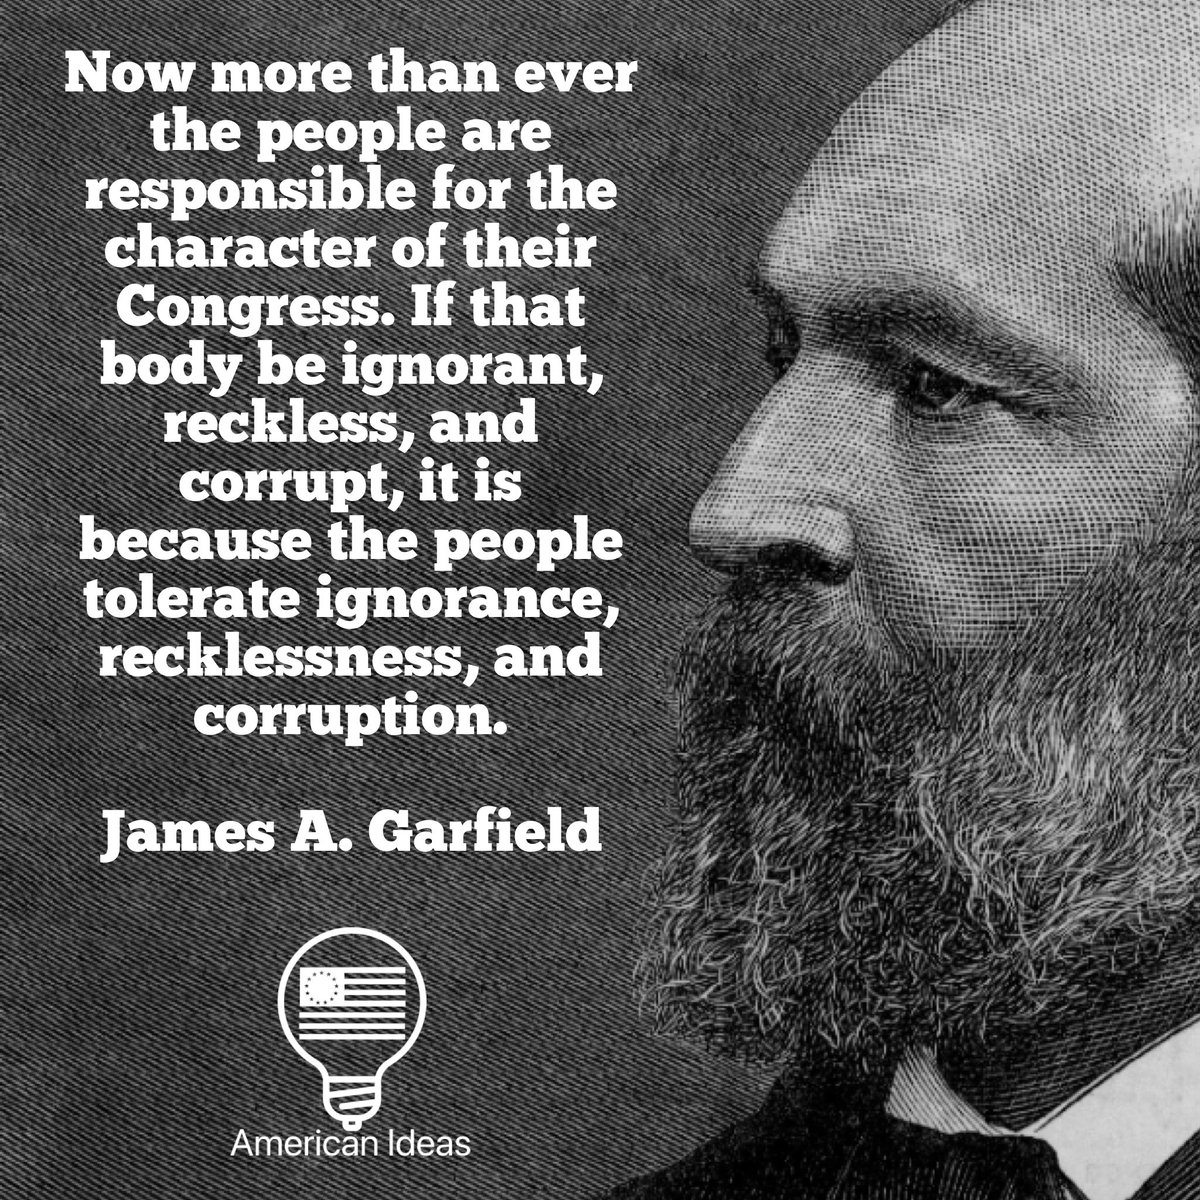 #americanideas #jamesgarfield #votethemout #charactermatters #freedom